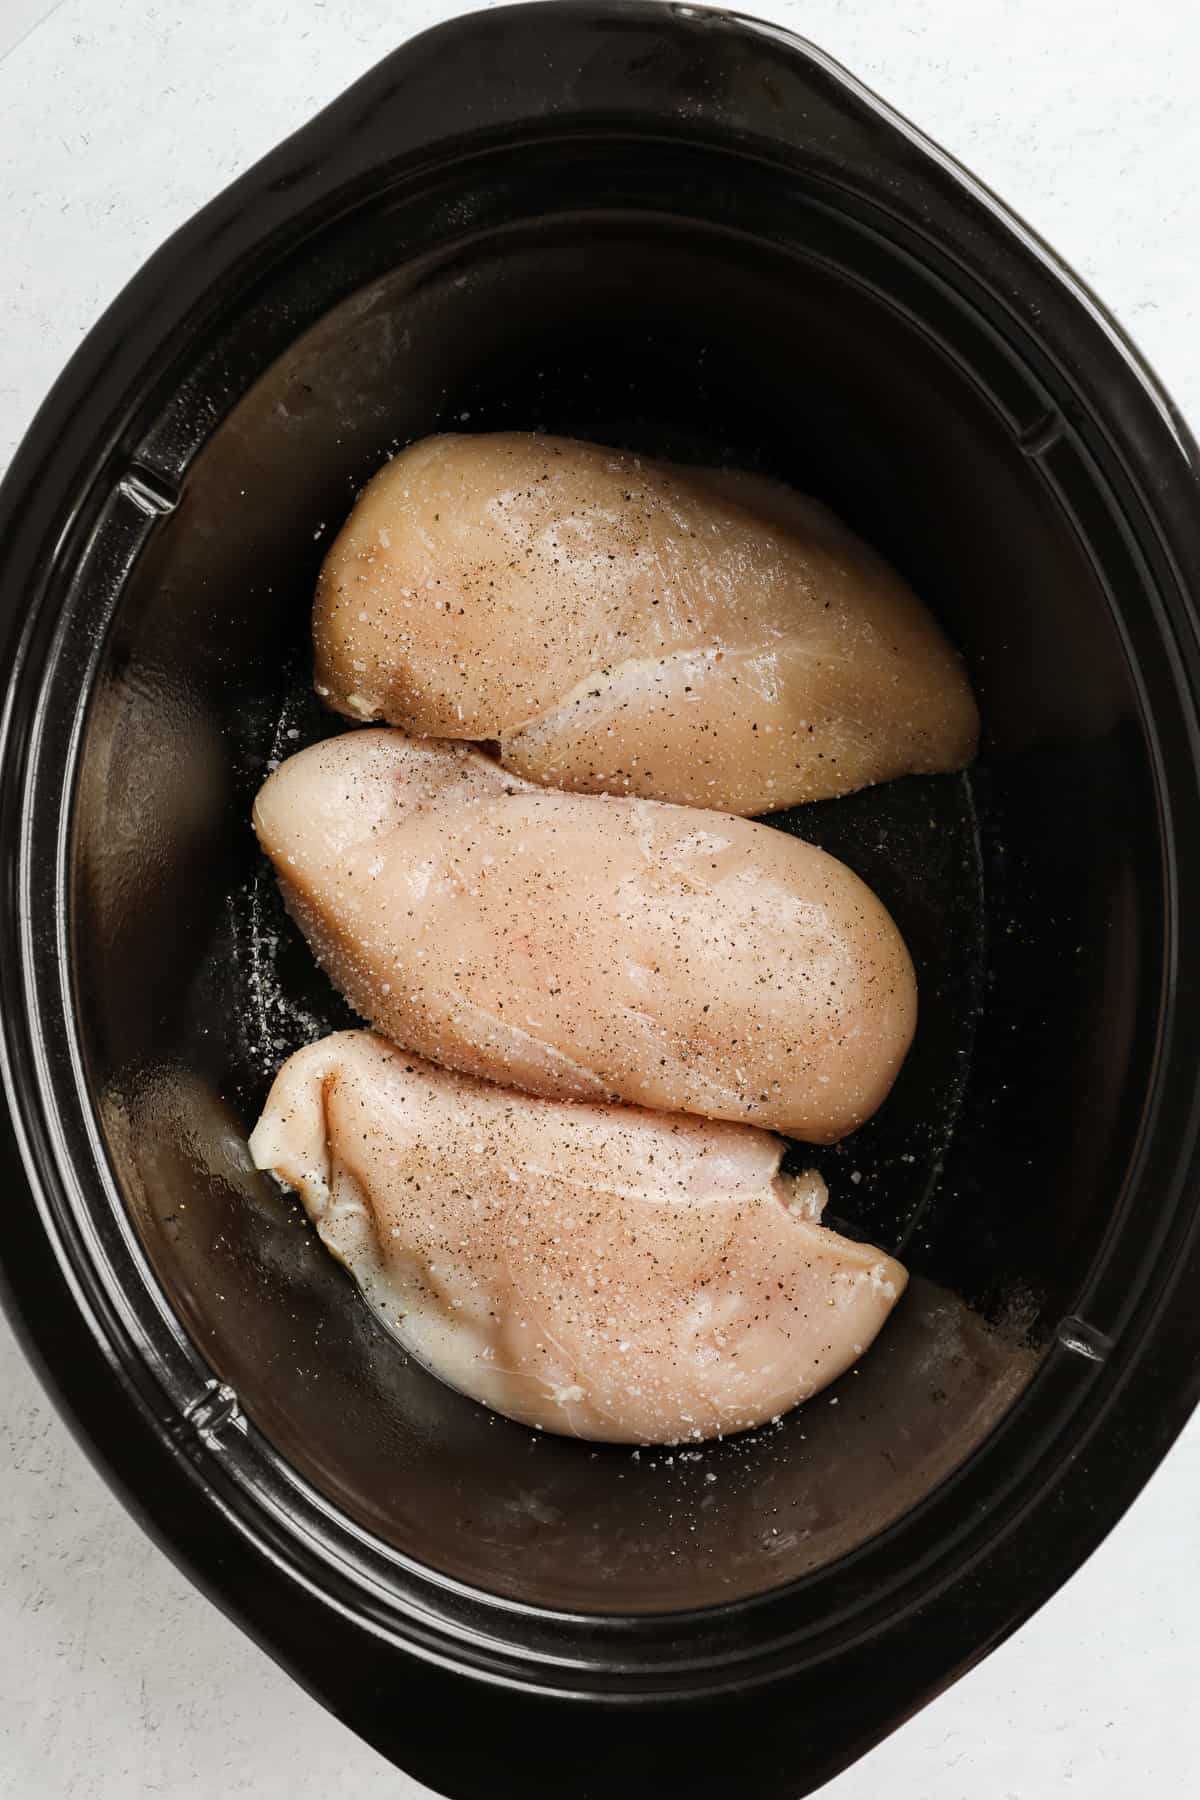 raw chicken in the crockpot